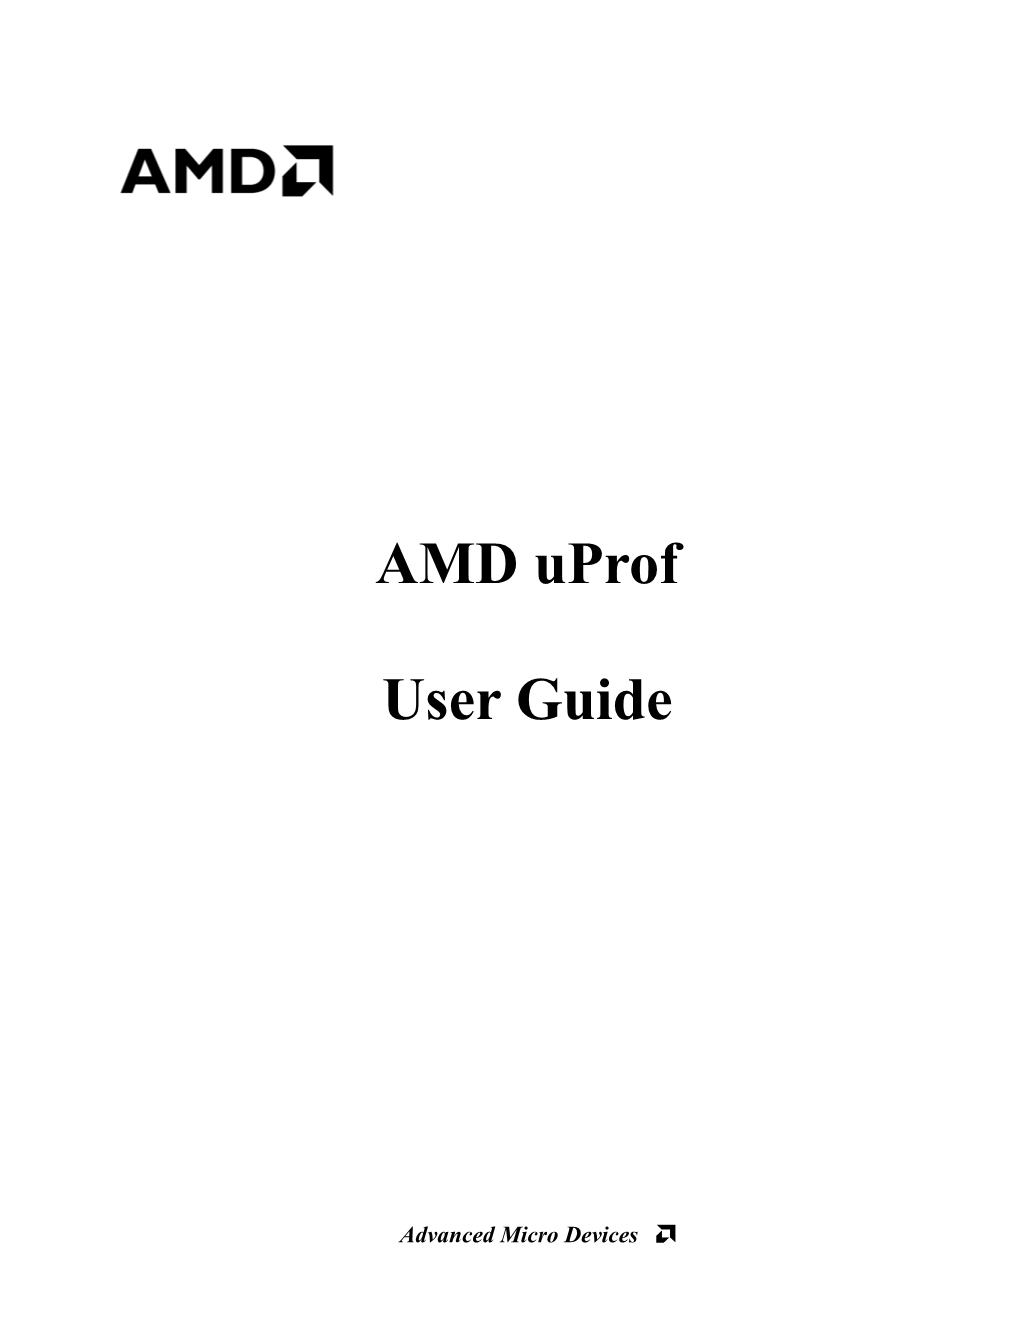 AMD Uprof User Guide